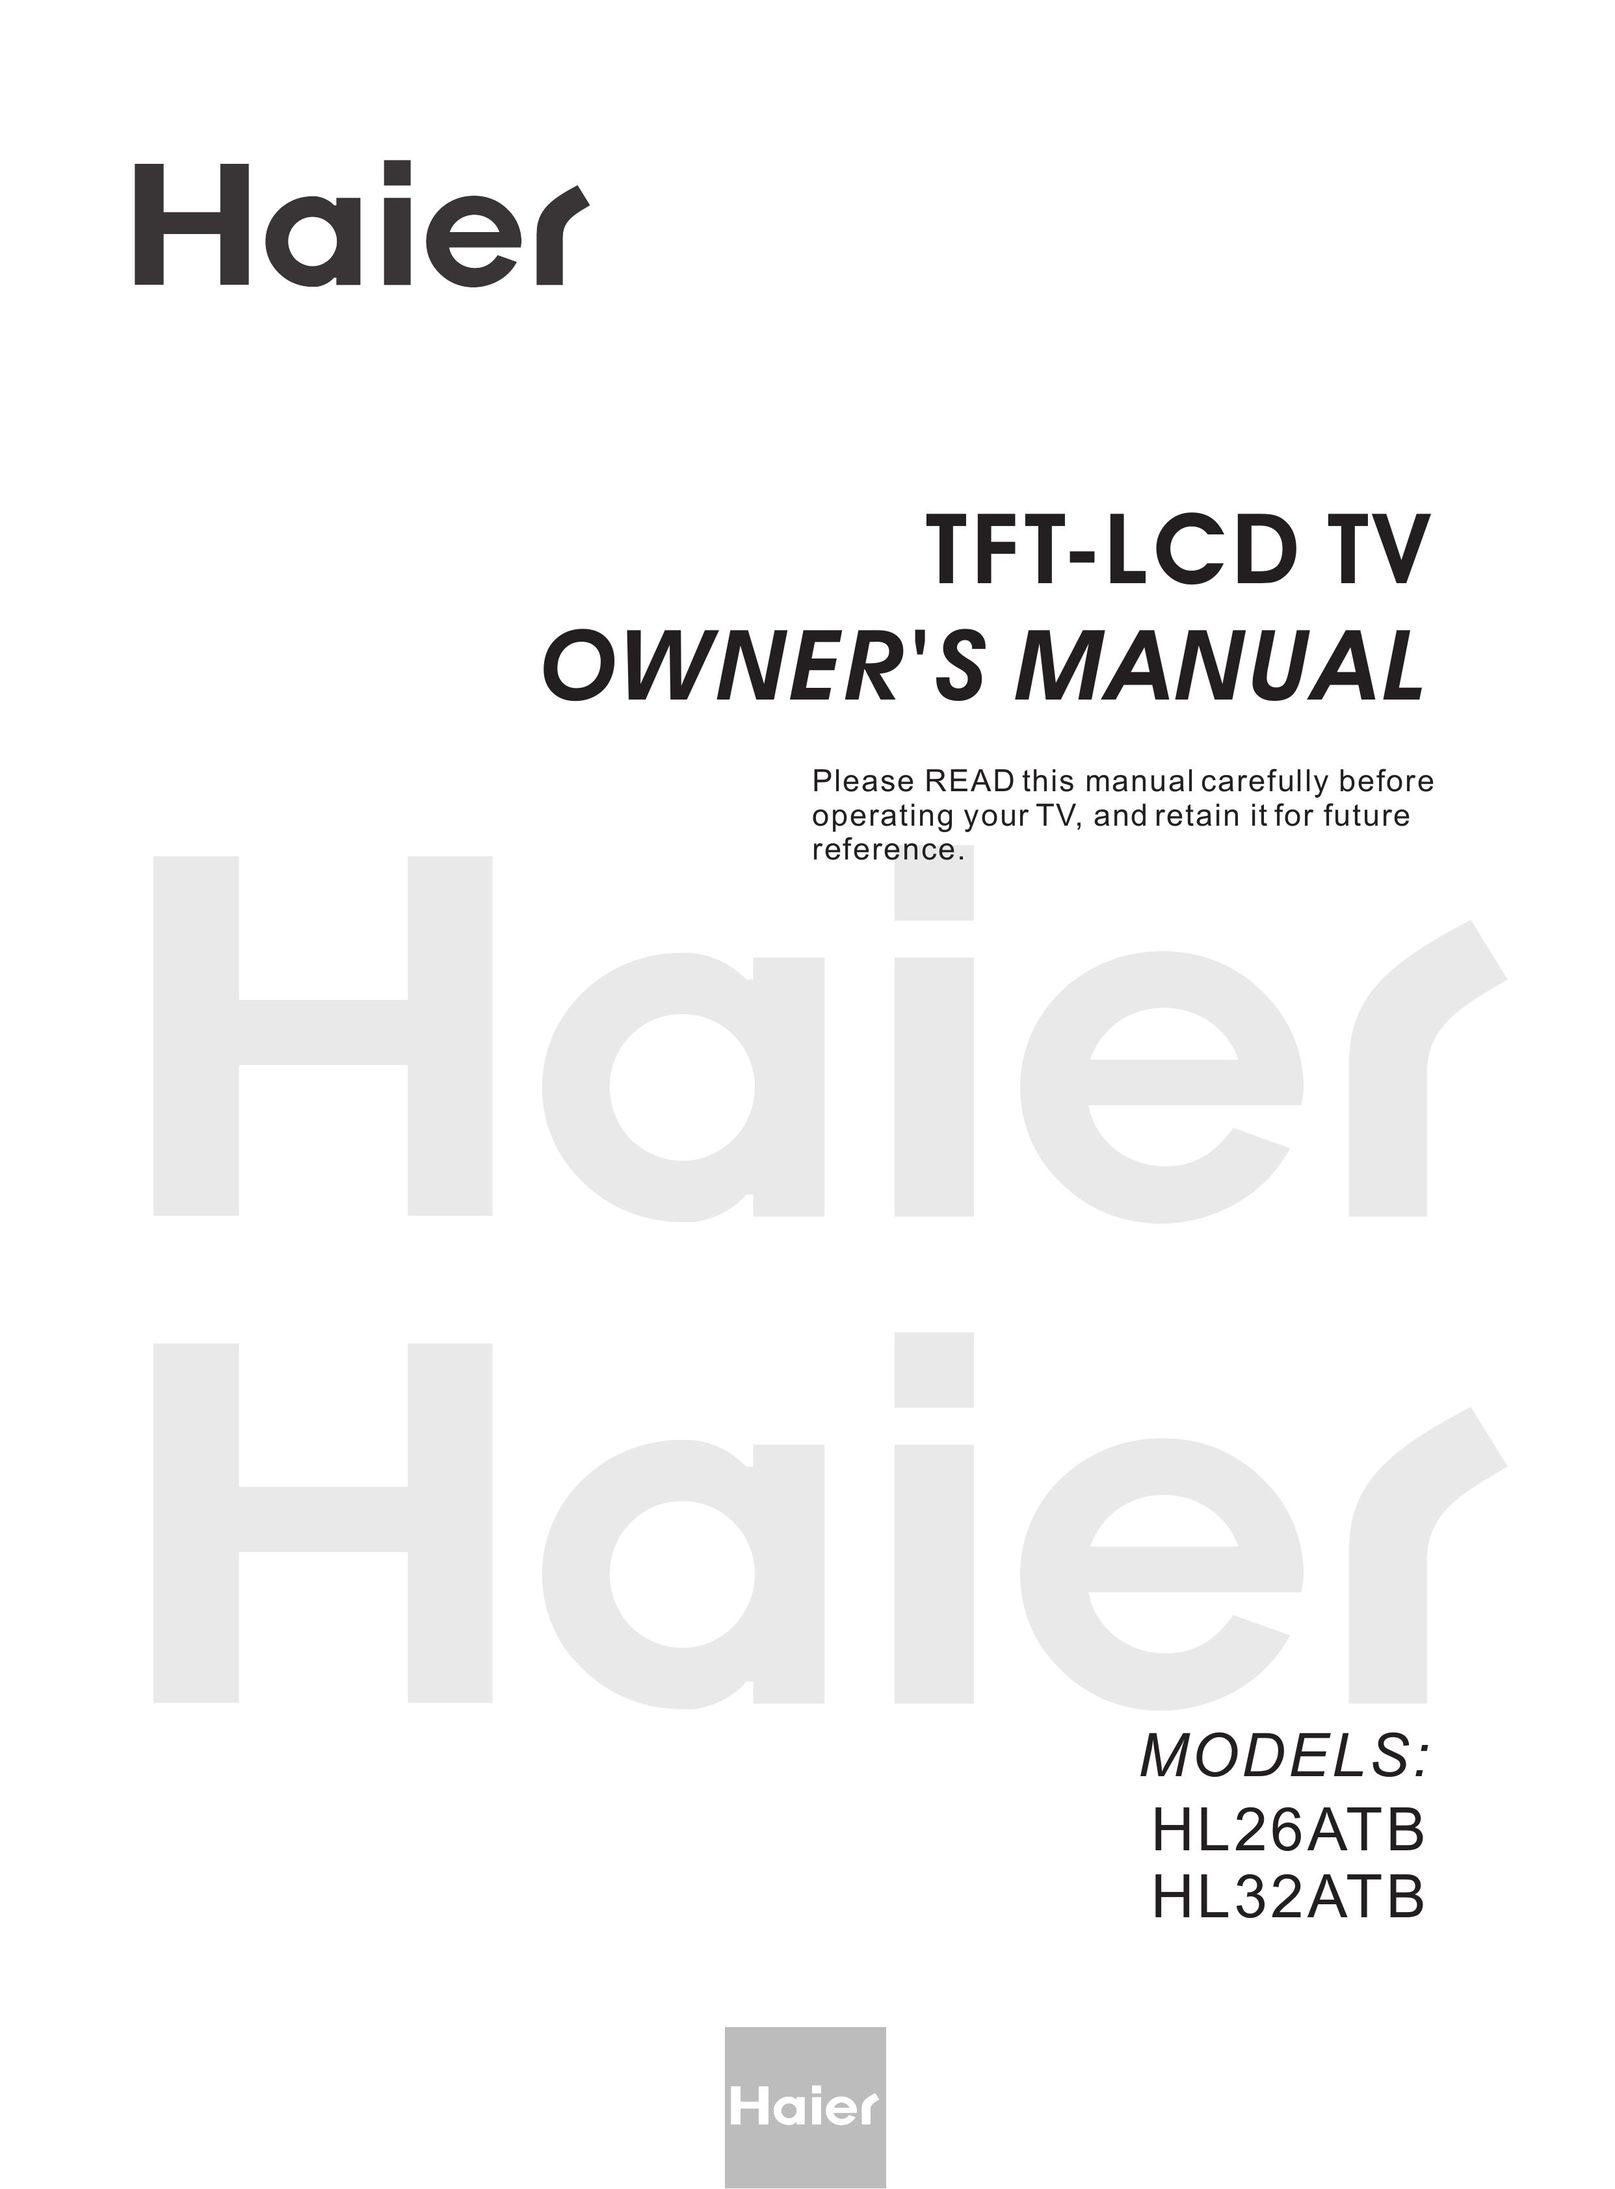 Haier HL26ATB Flat Panel Television User Manual